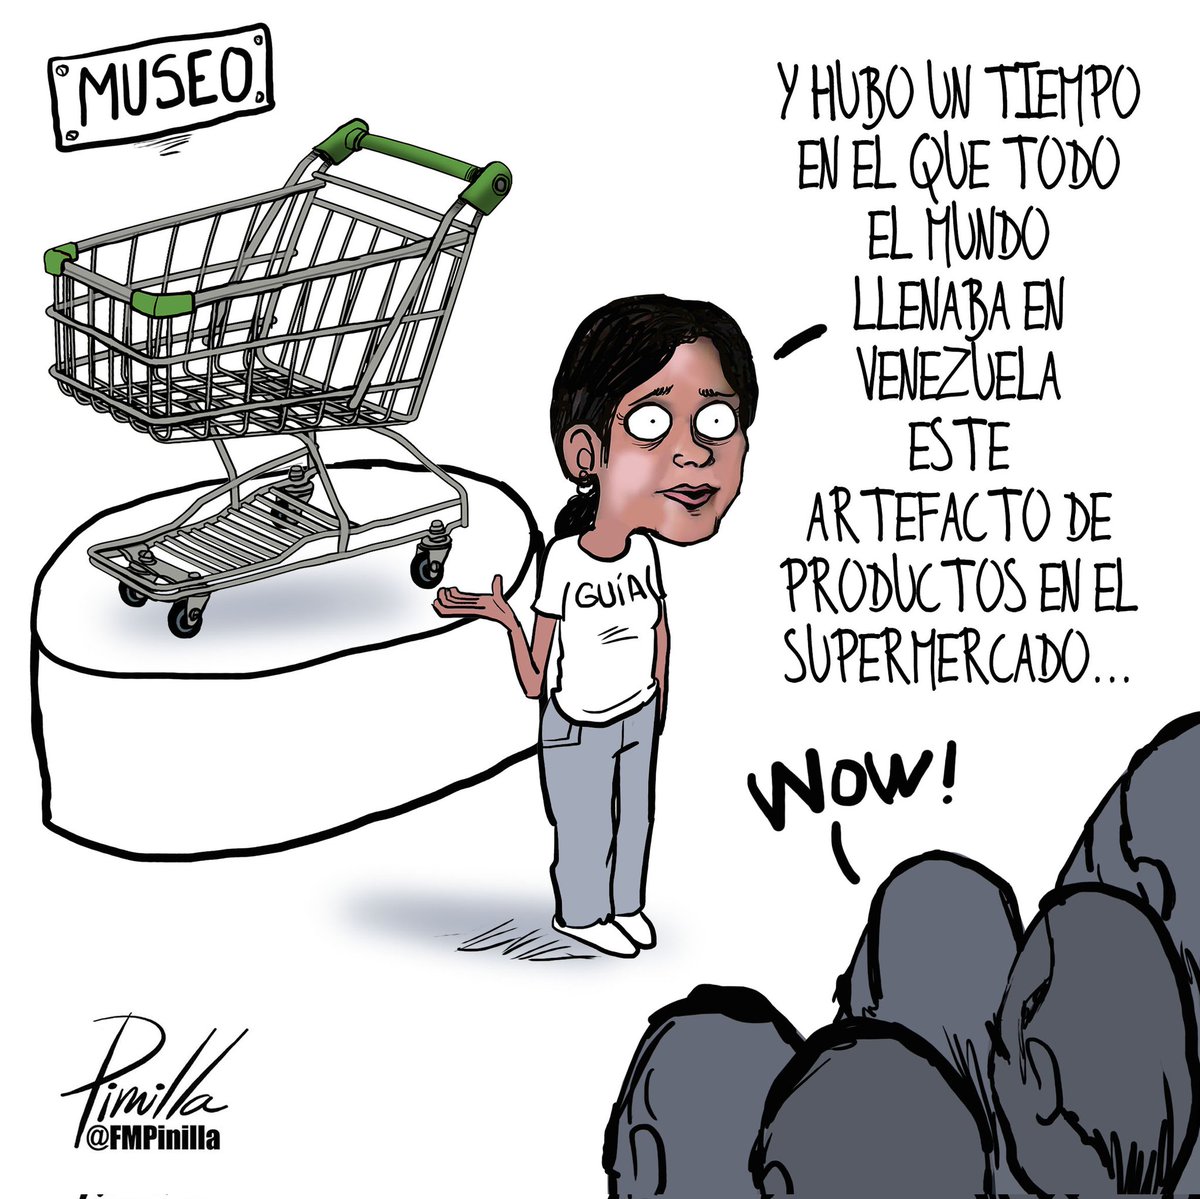 Objeto de museo...
•
#caricatura para @elnacionalweb 
•
#caricatura #cartoon #Venezuela #venezolanos #politicalcartoon